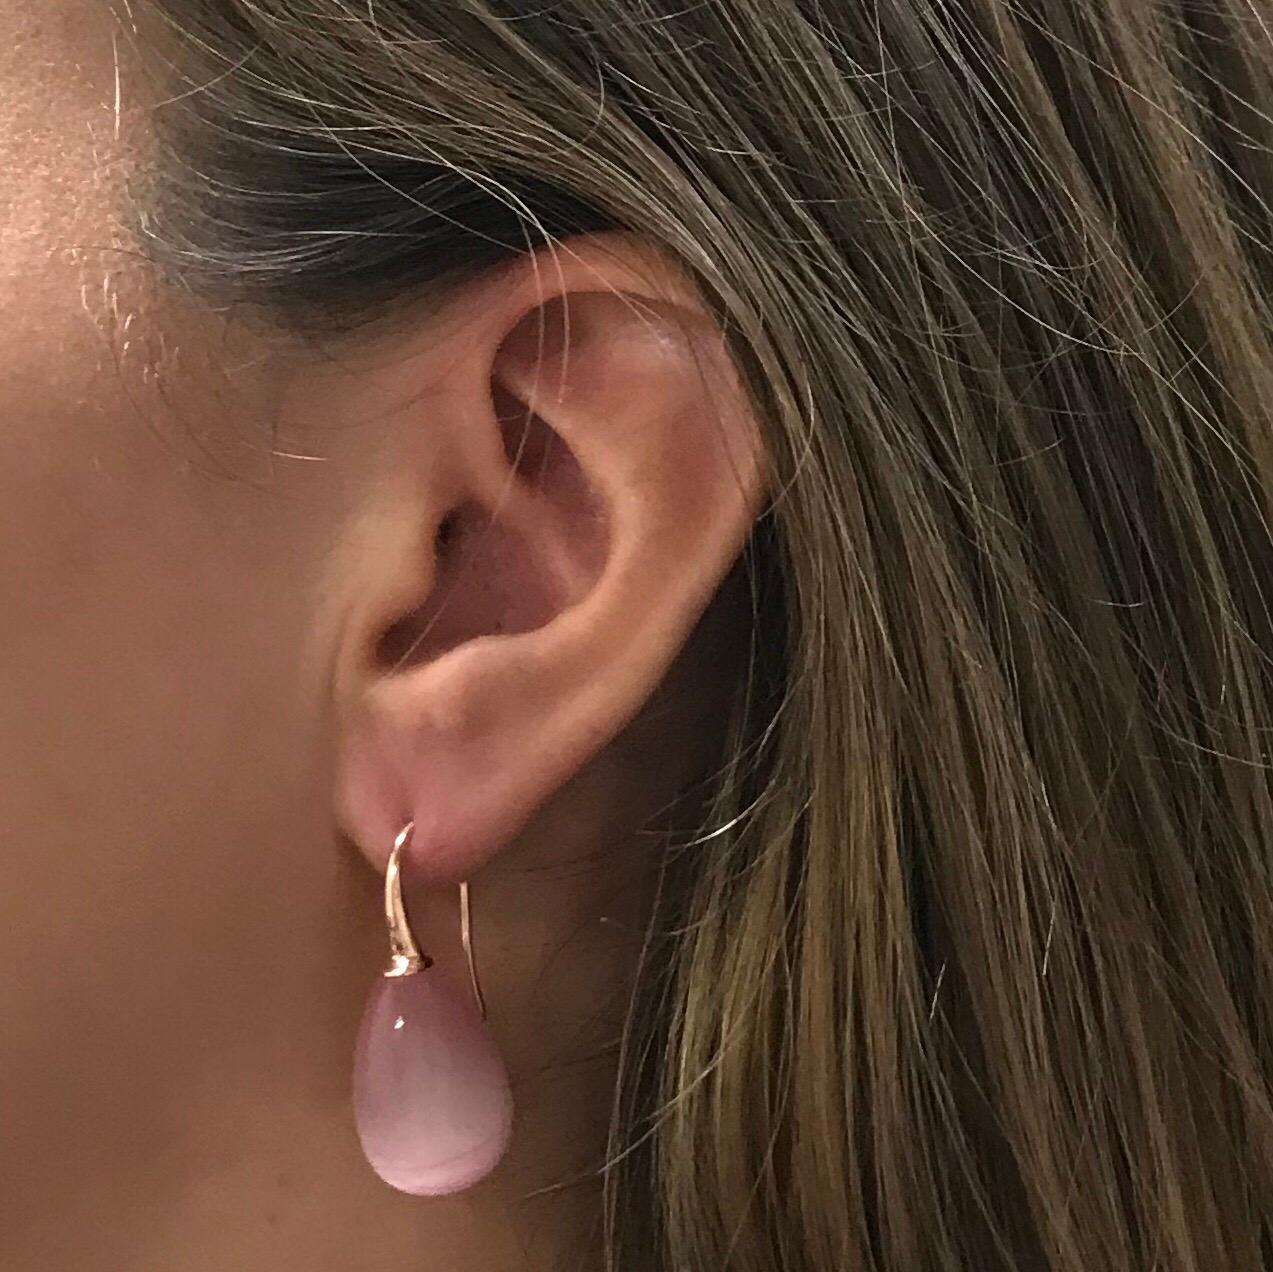 Pink Quartz and Rose Gold 18 Karat Drop Earrings 3